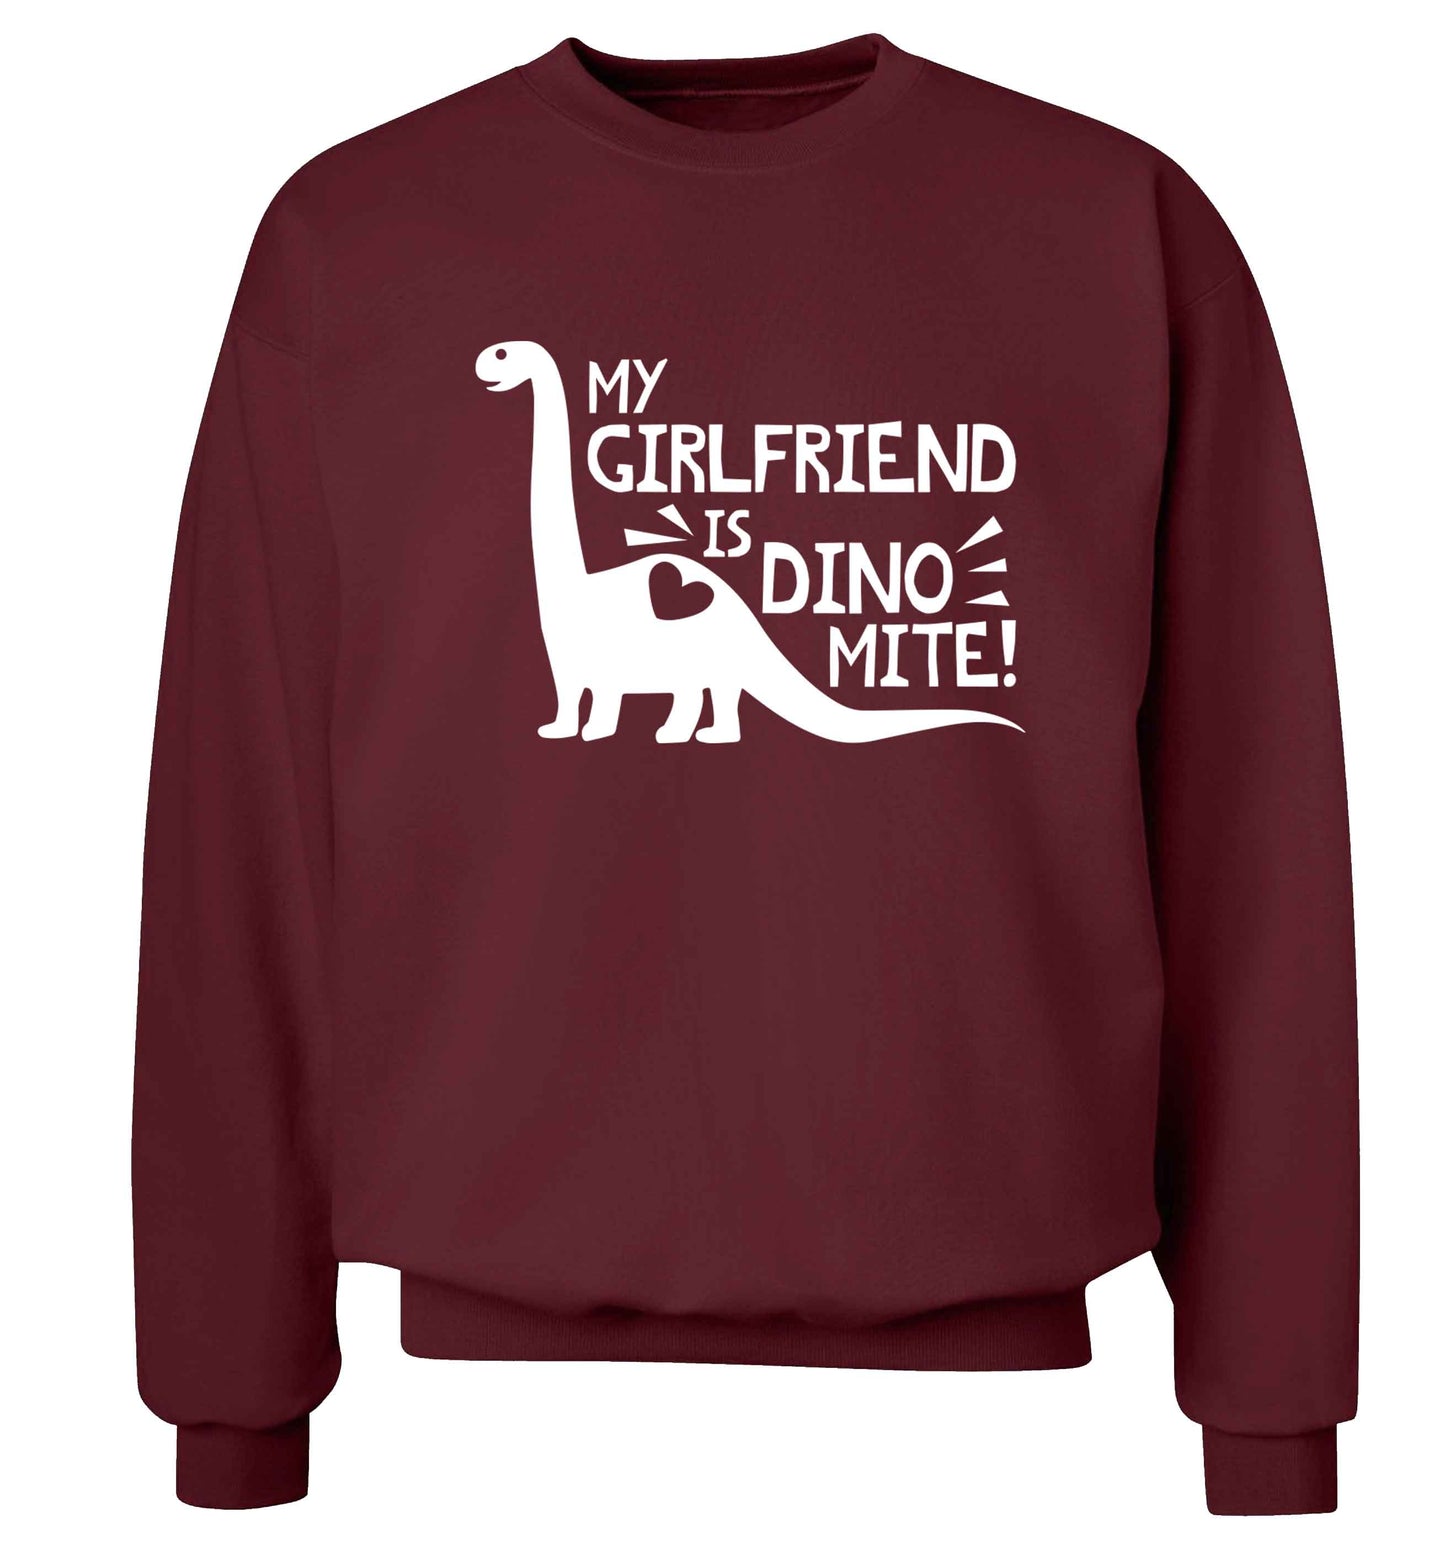 My girlfriend is dinomite! Adult's unisex maroon Sweater 2XL